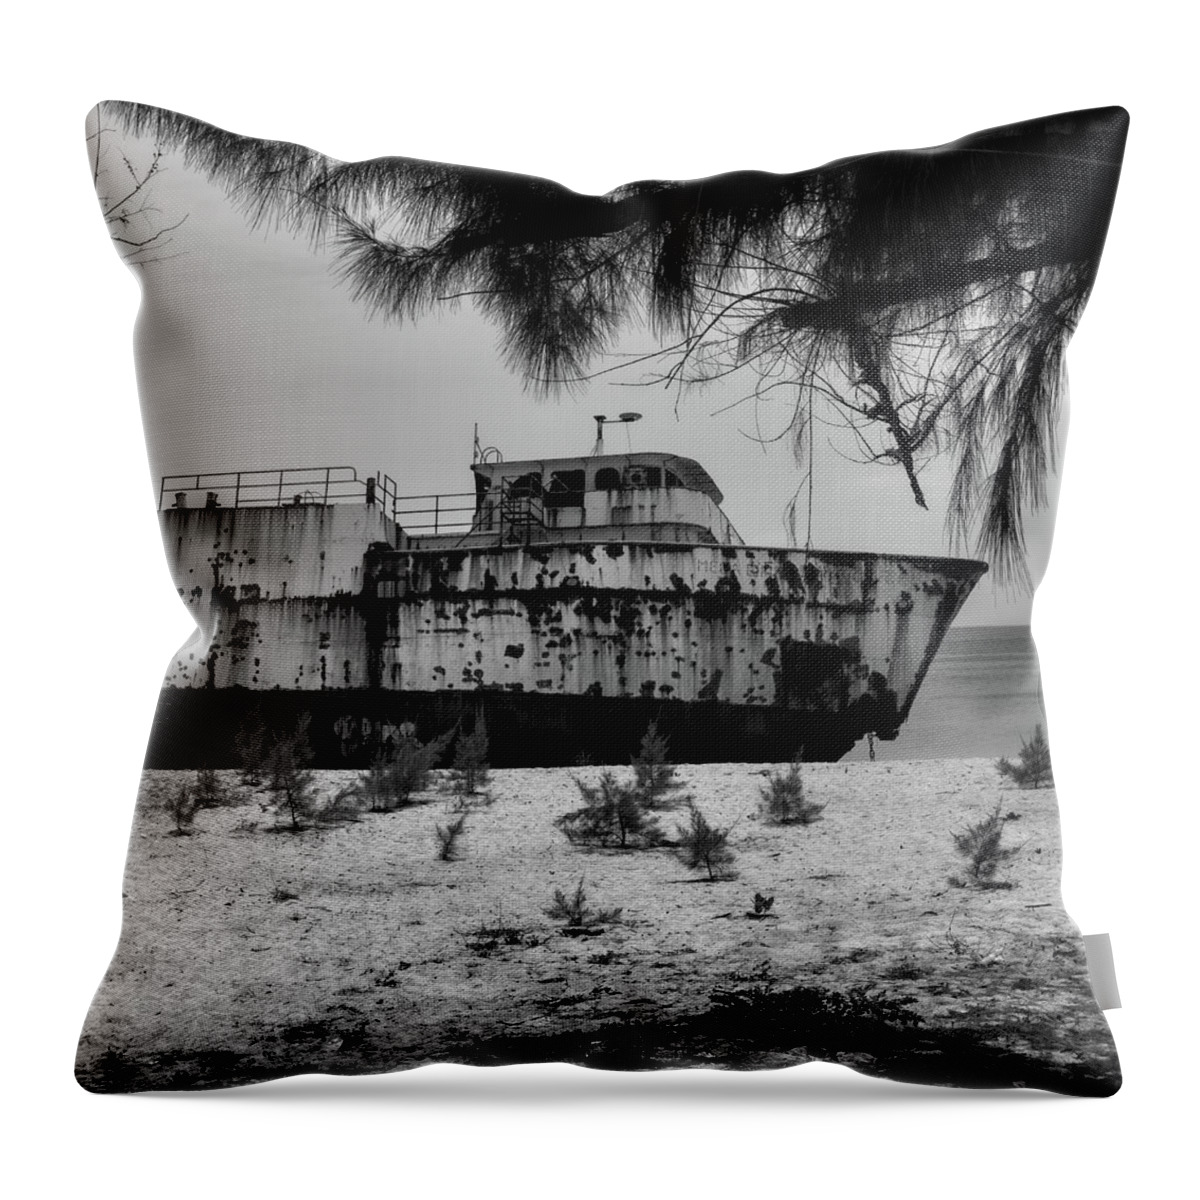 Shipwreck Throw Pillow featuring the photograph Shipwreck Through the Trees by Robert Wilder Jr